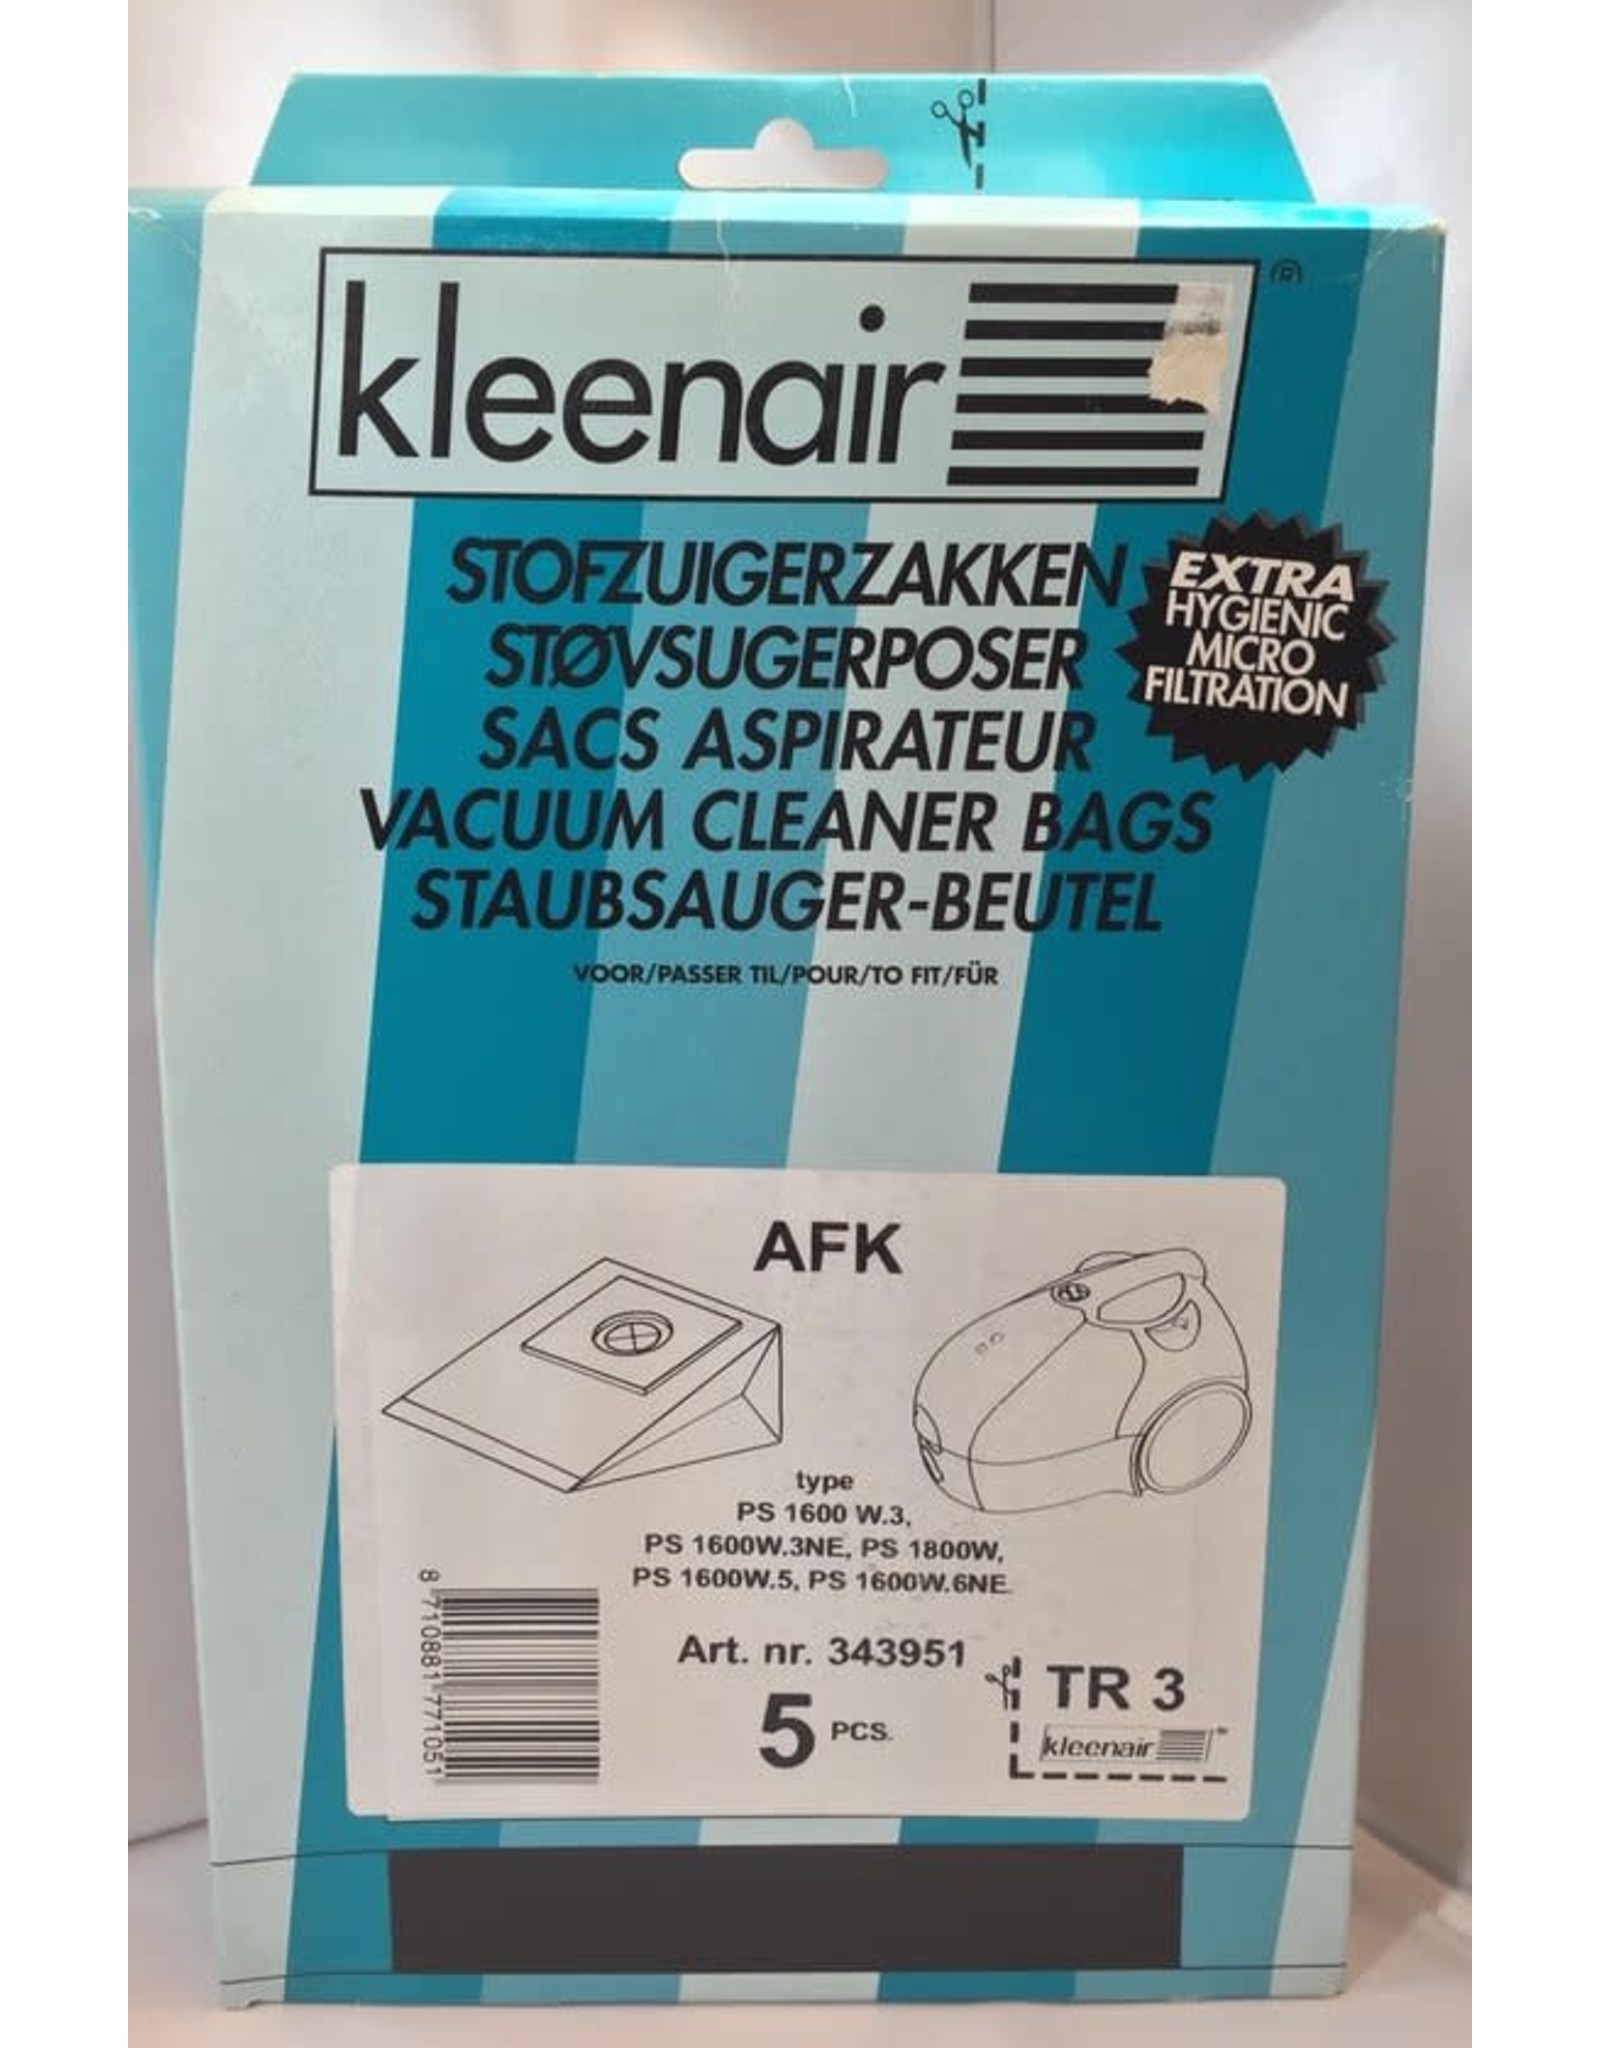 Joseph Banks Kalksteen graven KLEENAIR Kleenair TR 3 stofzuiger zak papier met micro filtration - AFK  stofzuigerzakken - H-BLOK & TOYS